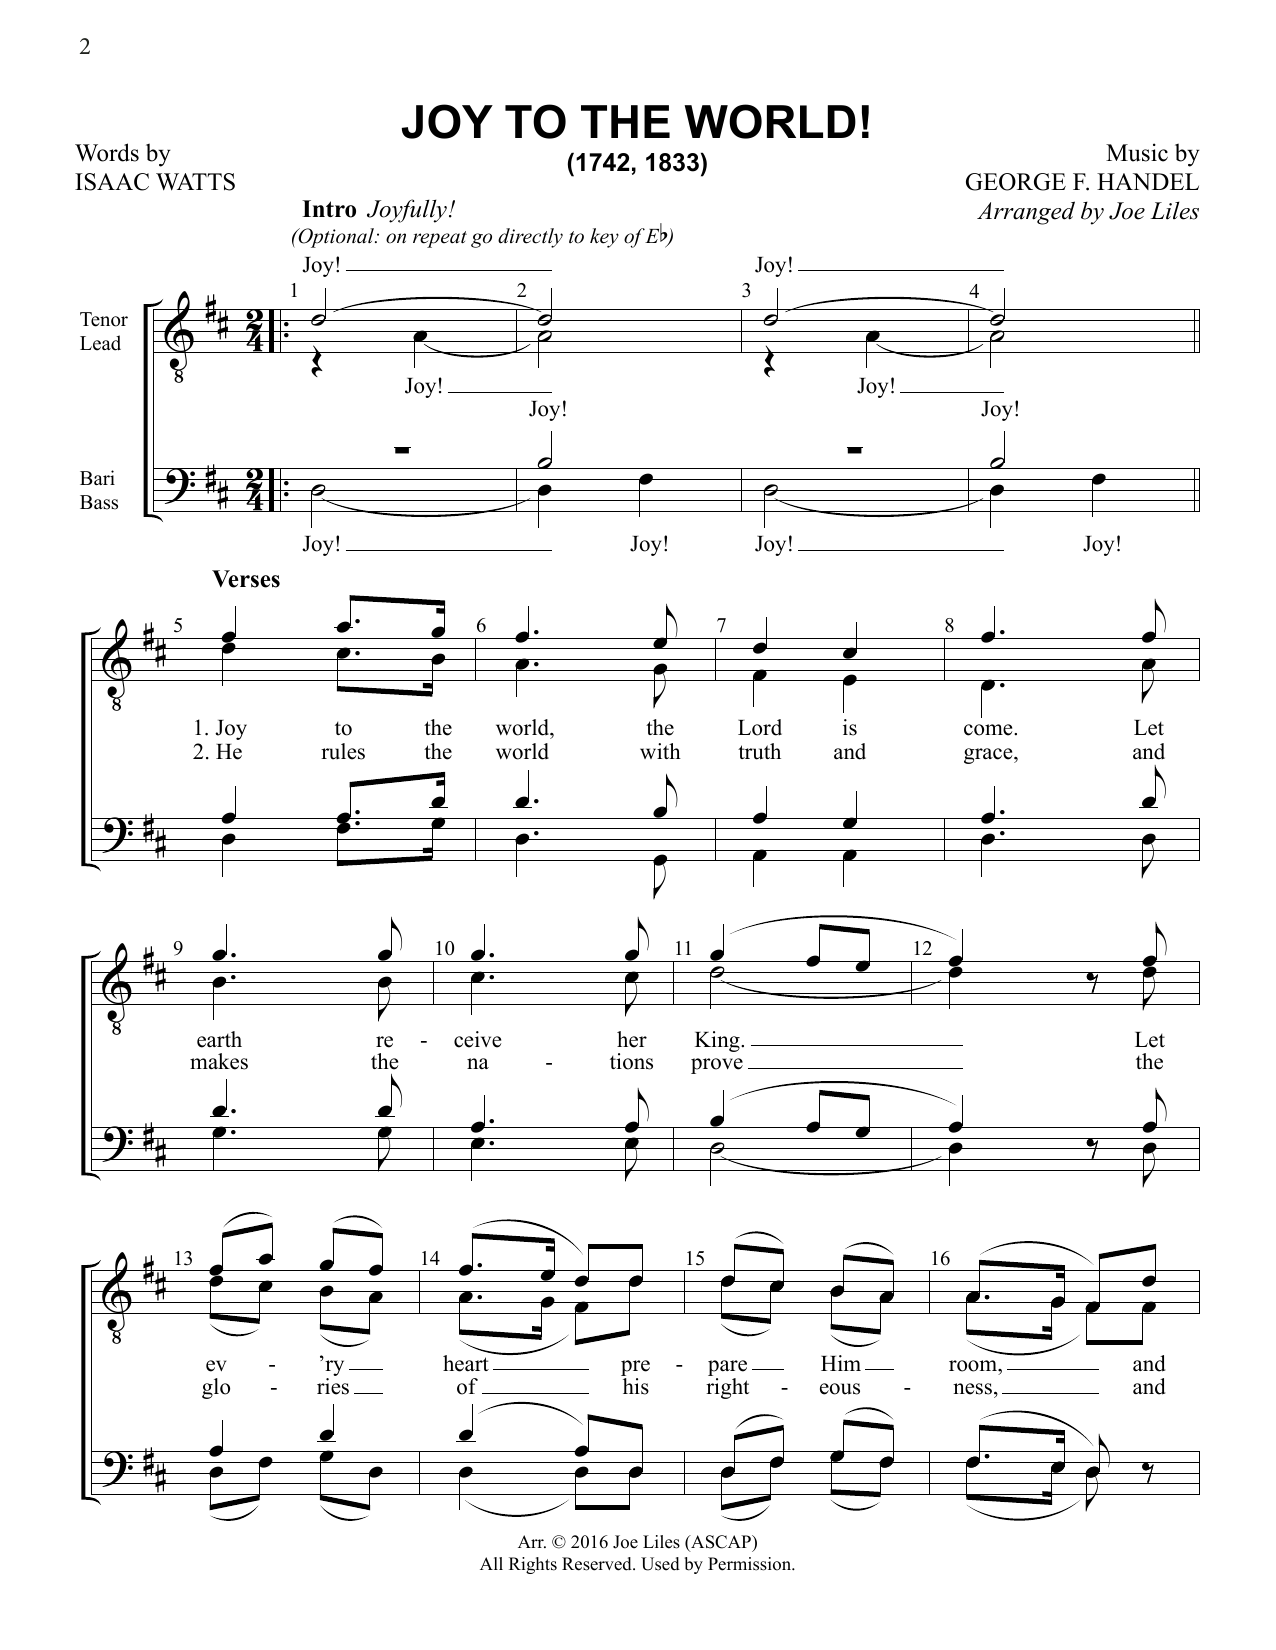 Various Yuletide Favorites (Volume II) Sheet Music Notes & Chords for TTBB Choir - Download or Print PDF